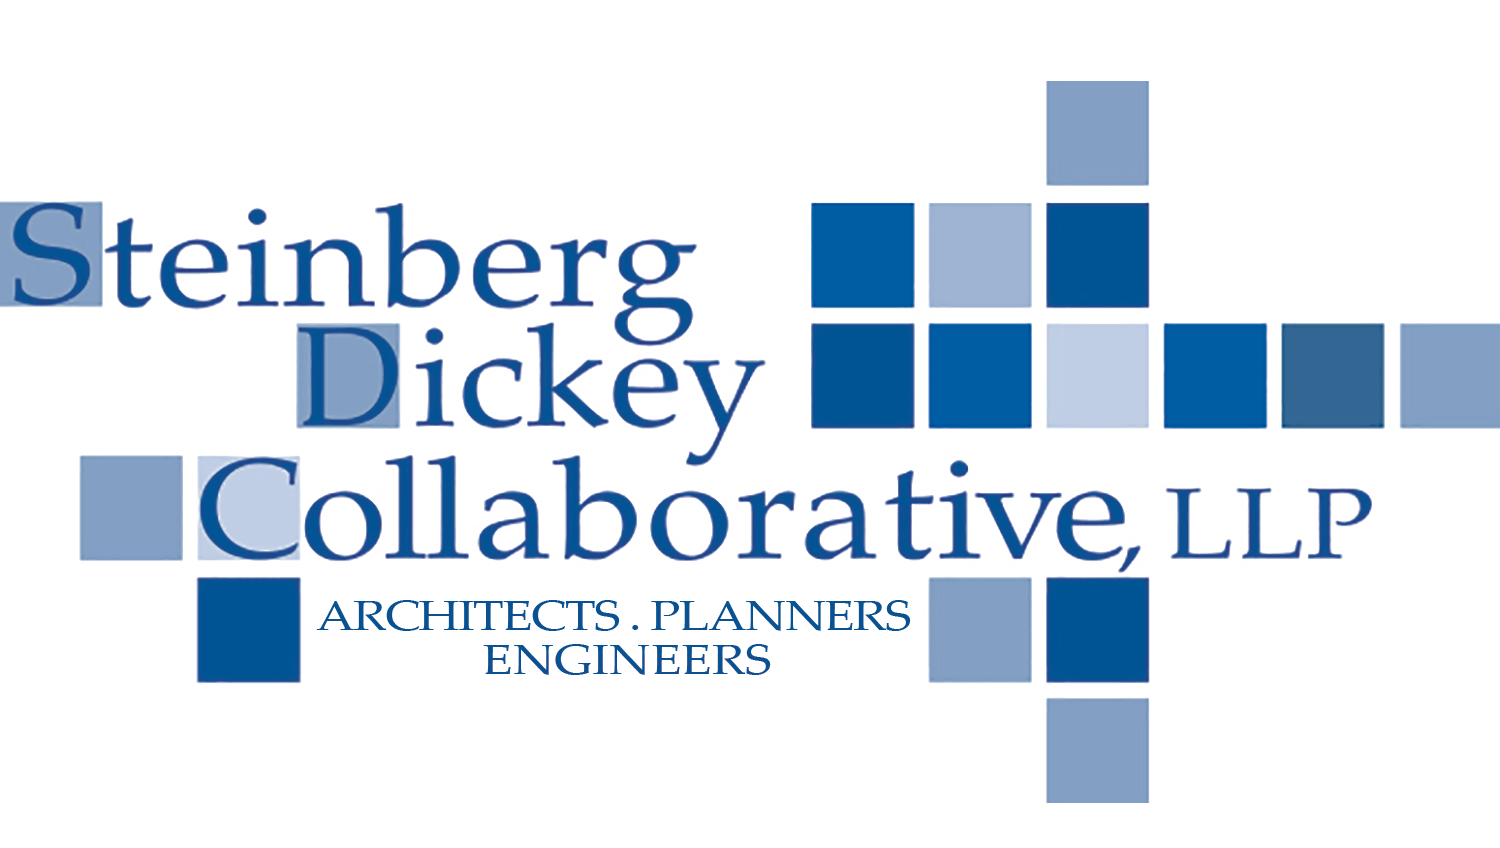 Steinberg Dickey Collabaorative